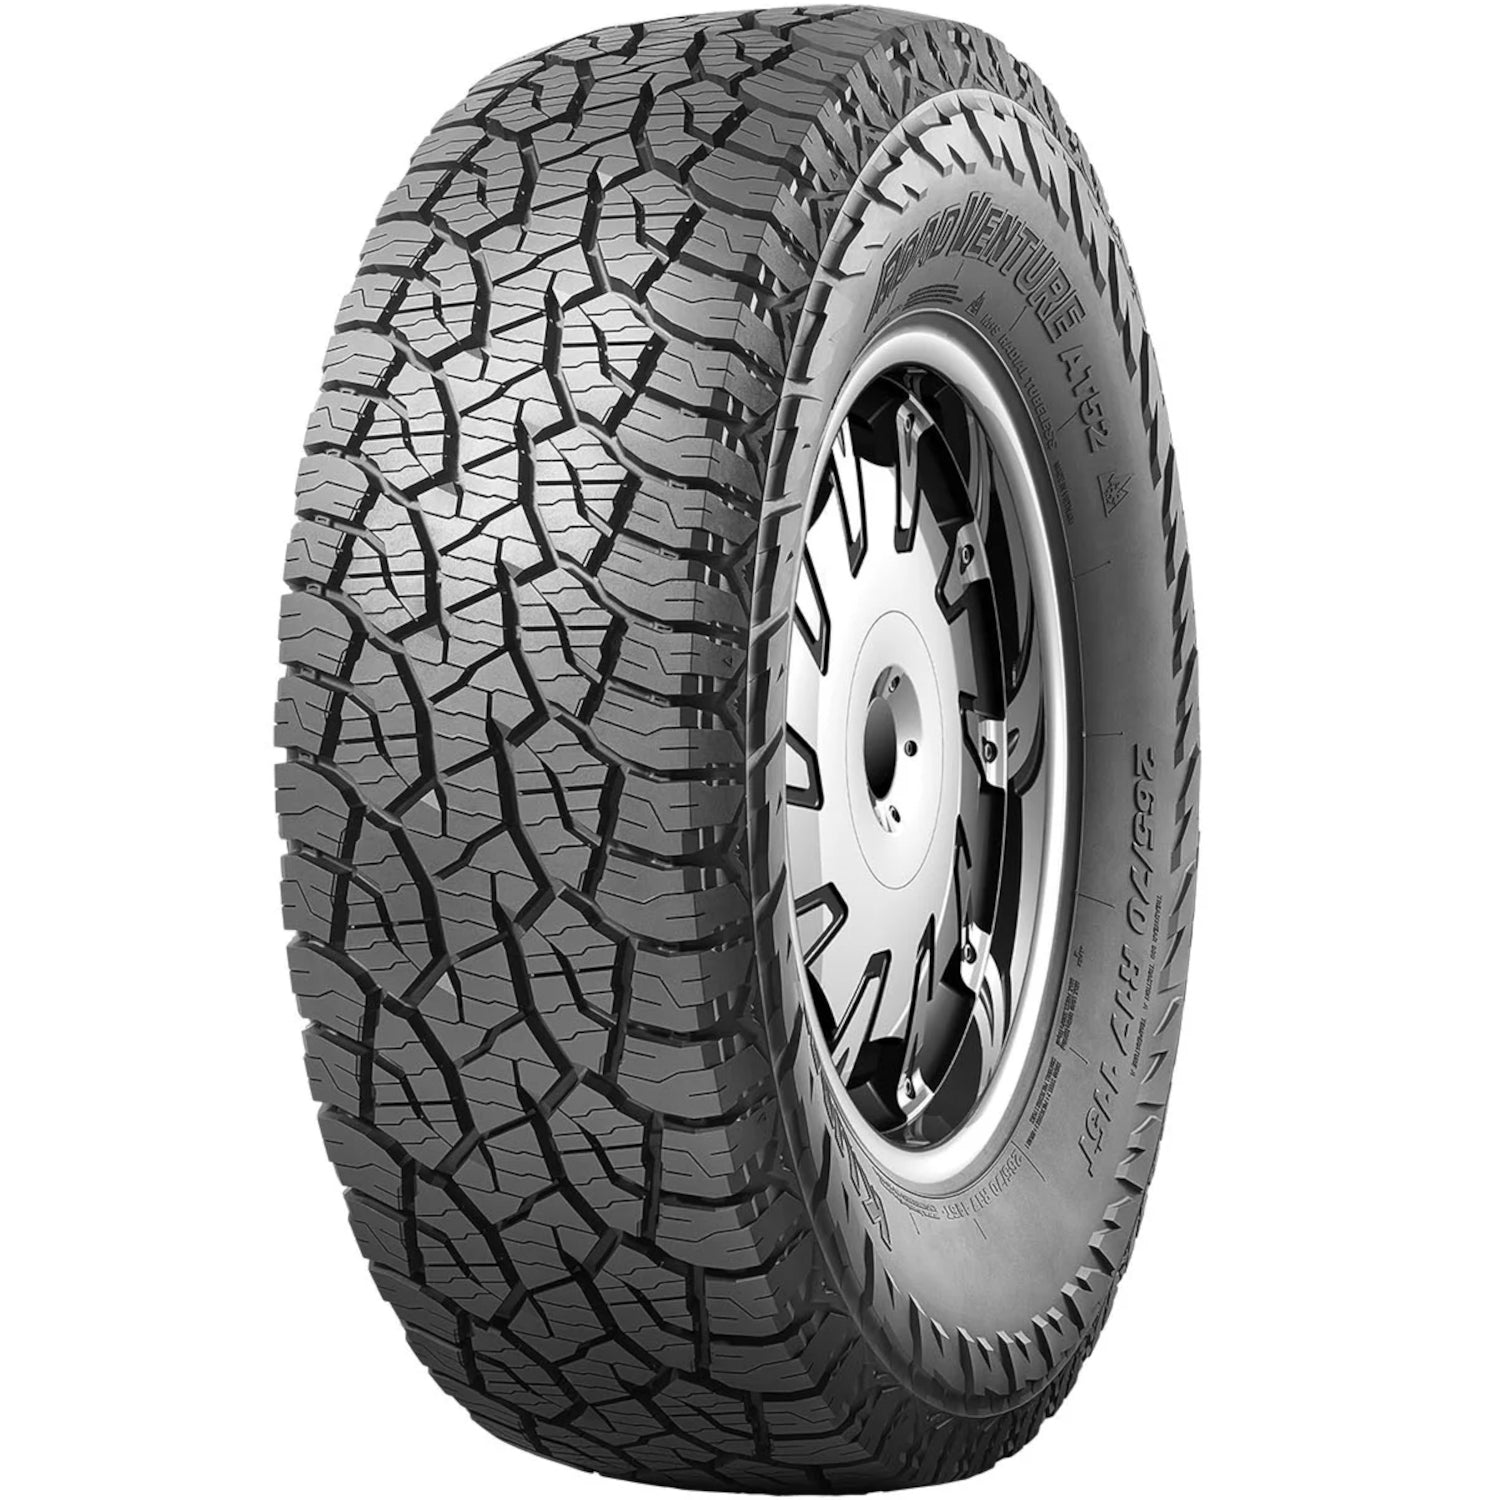 KUMHO ROAD VENTURE AT52 255/70R16 (30.1X10R 16) Tires